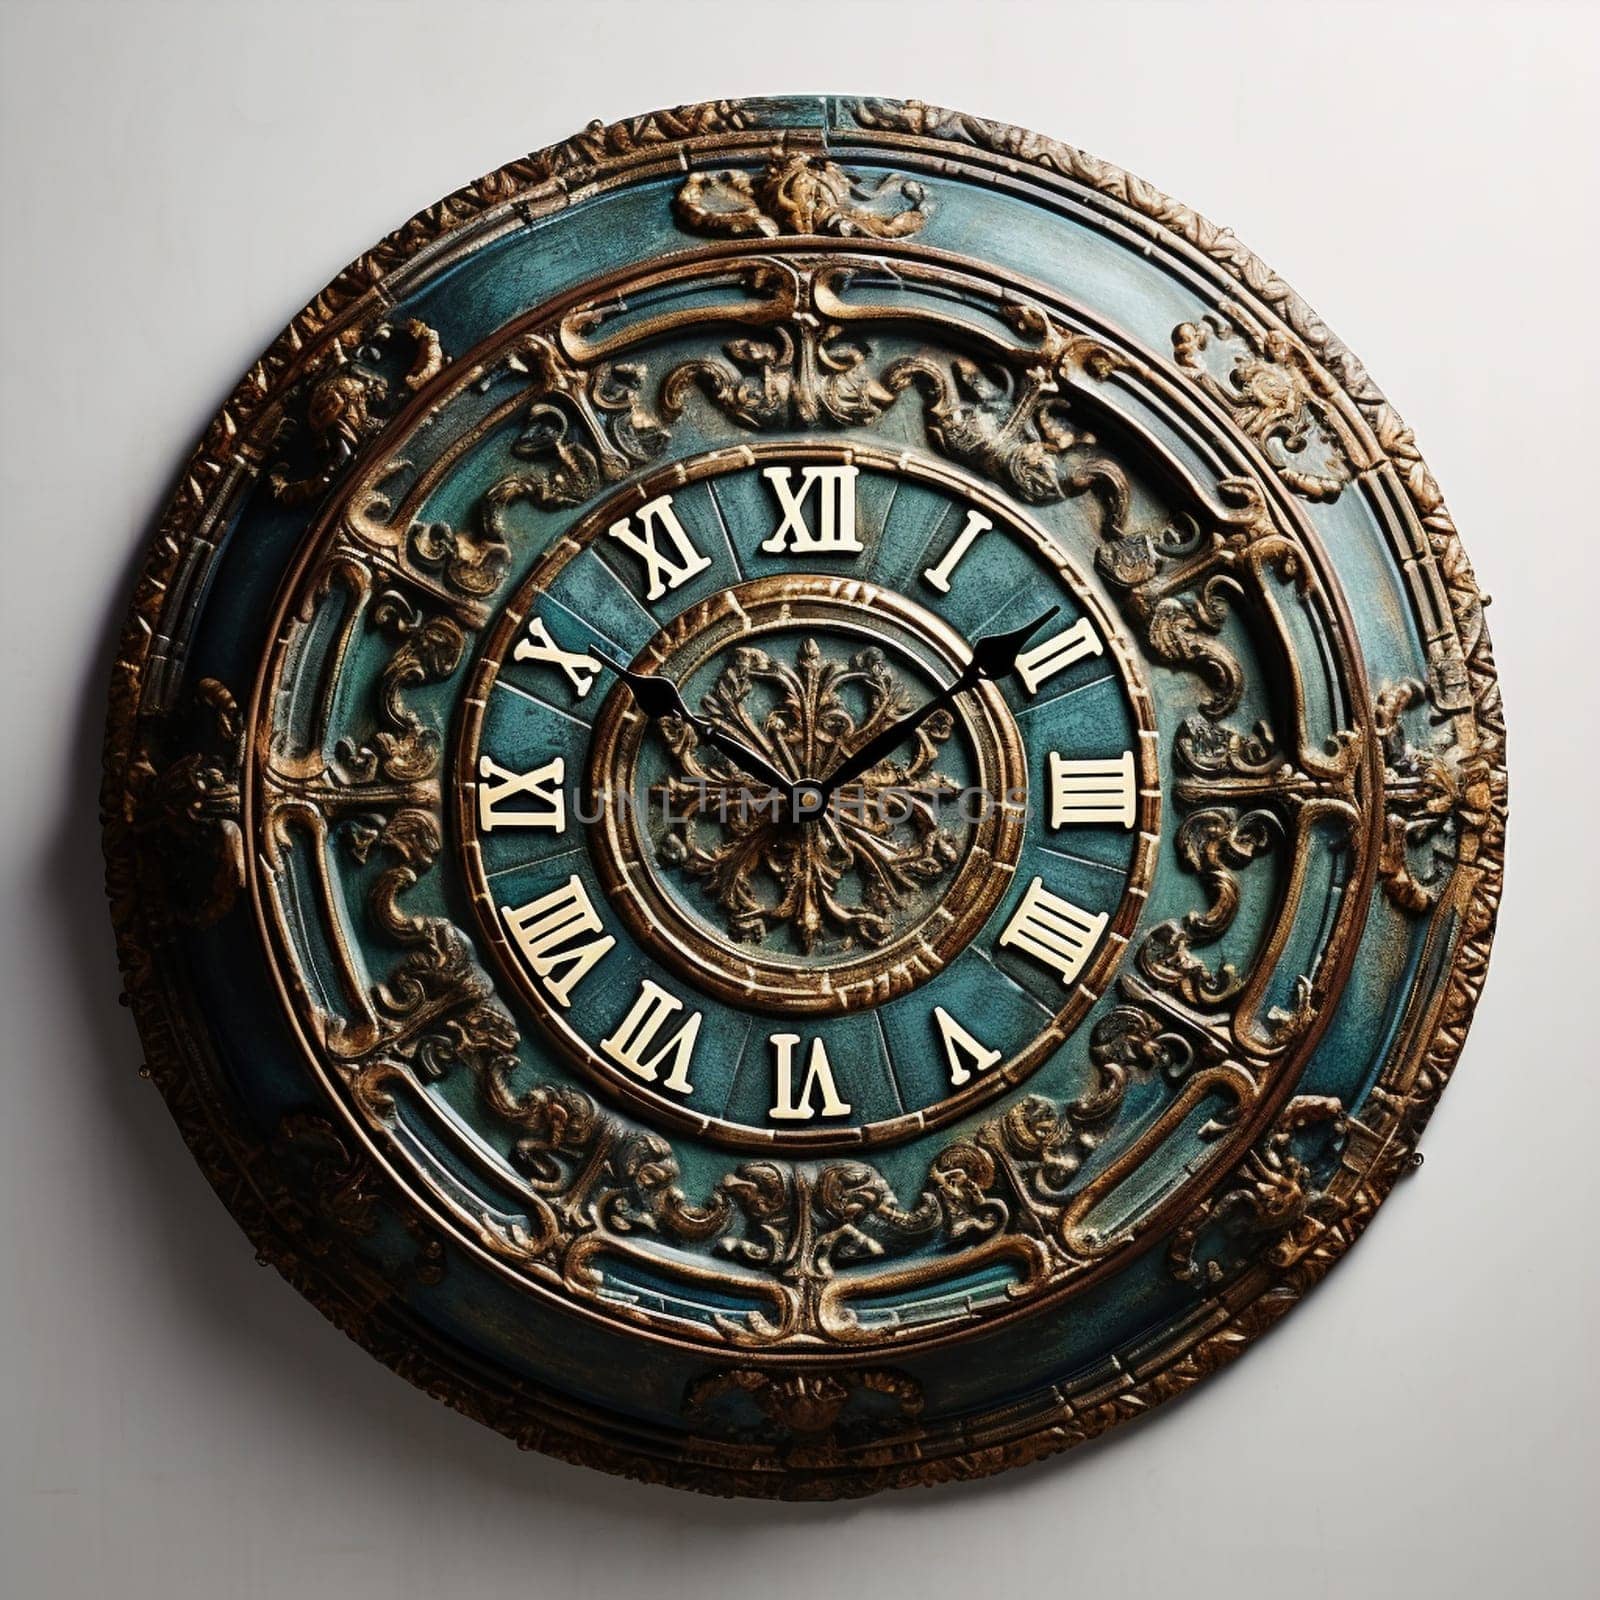 Aesthetics of Age: Vintage Clocks' Enduring Beauty by Sahin